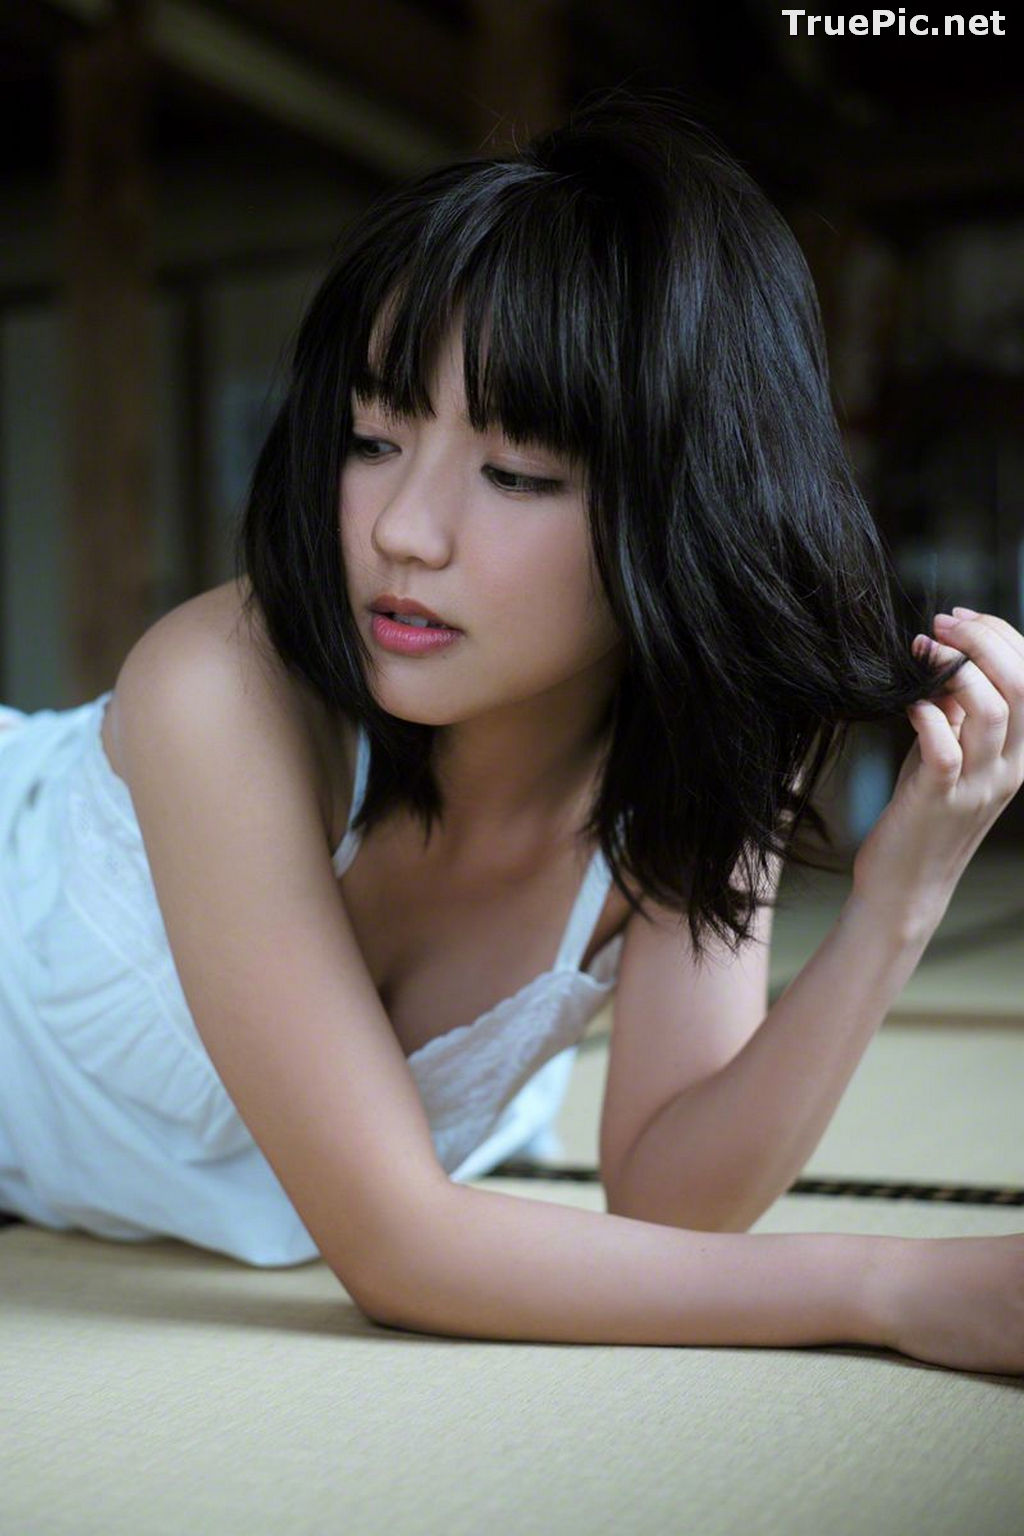 Image Wanibooks No.130 - Japanese Idol Singer and Actress - Erina Mano - TruePic.net - Picture-134